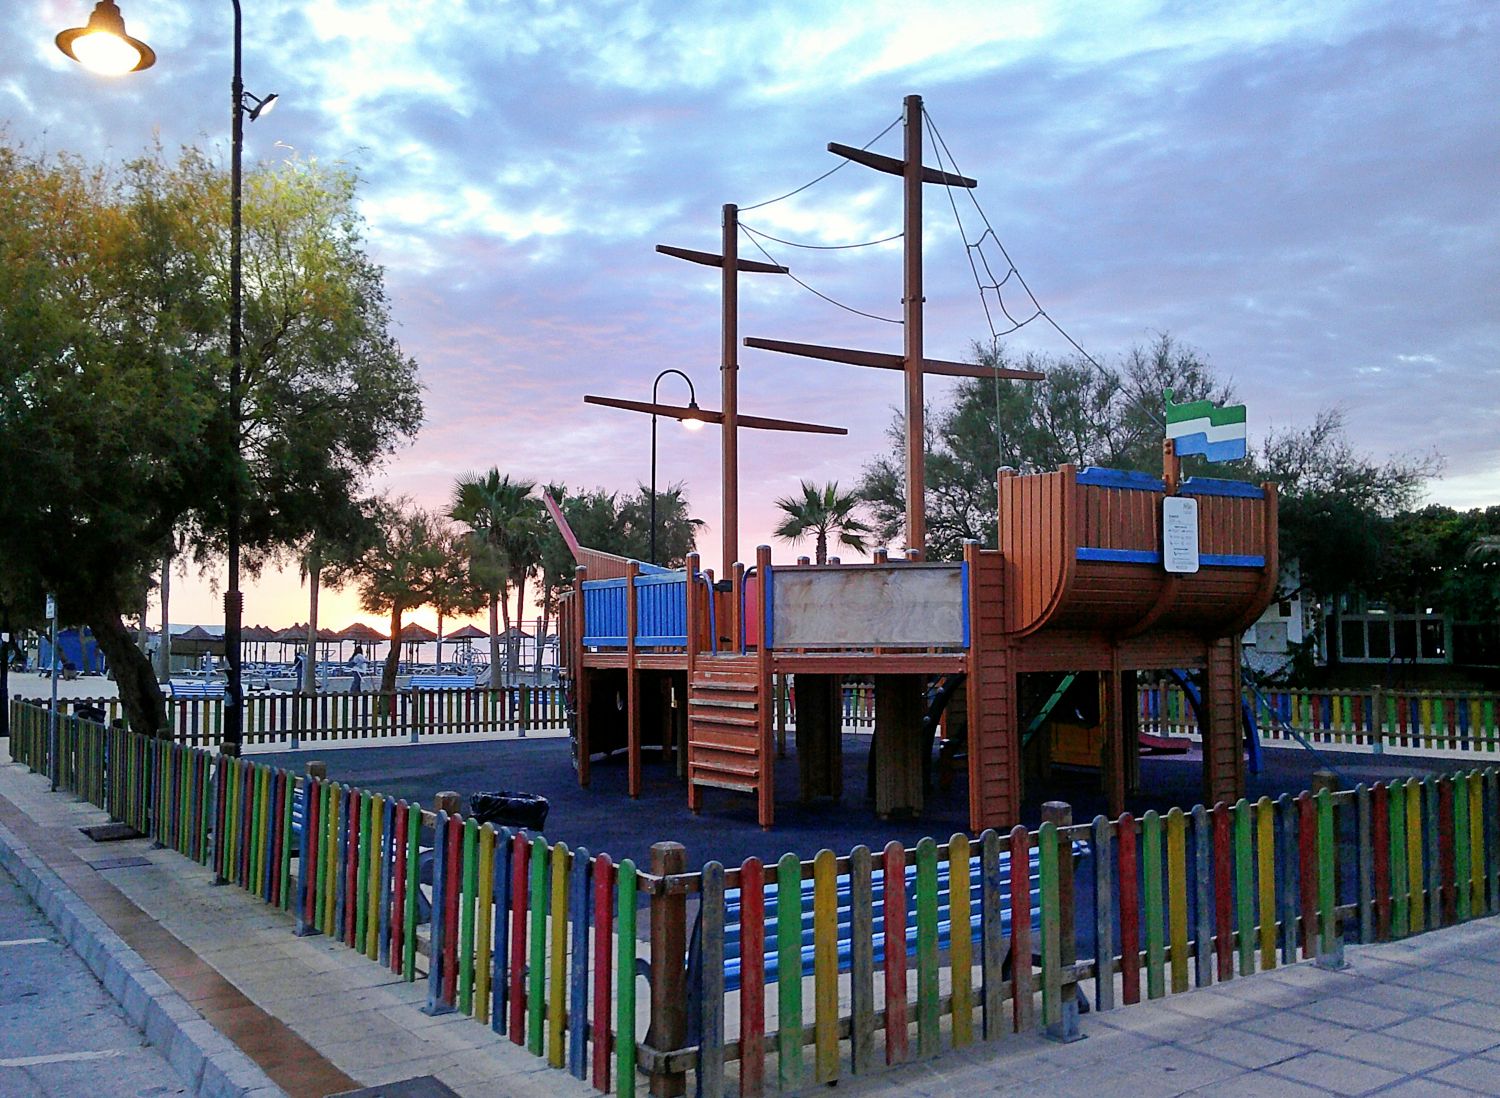 Kids' playground in La Cala on the Costa del Sol in Spain